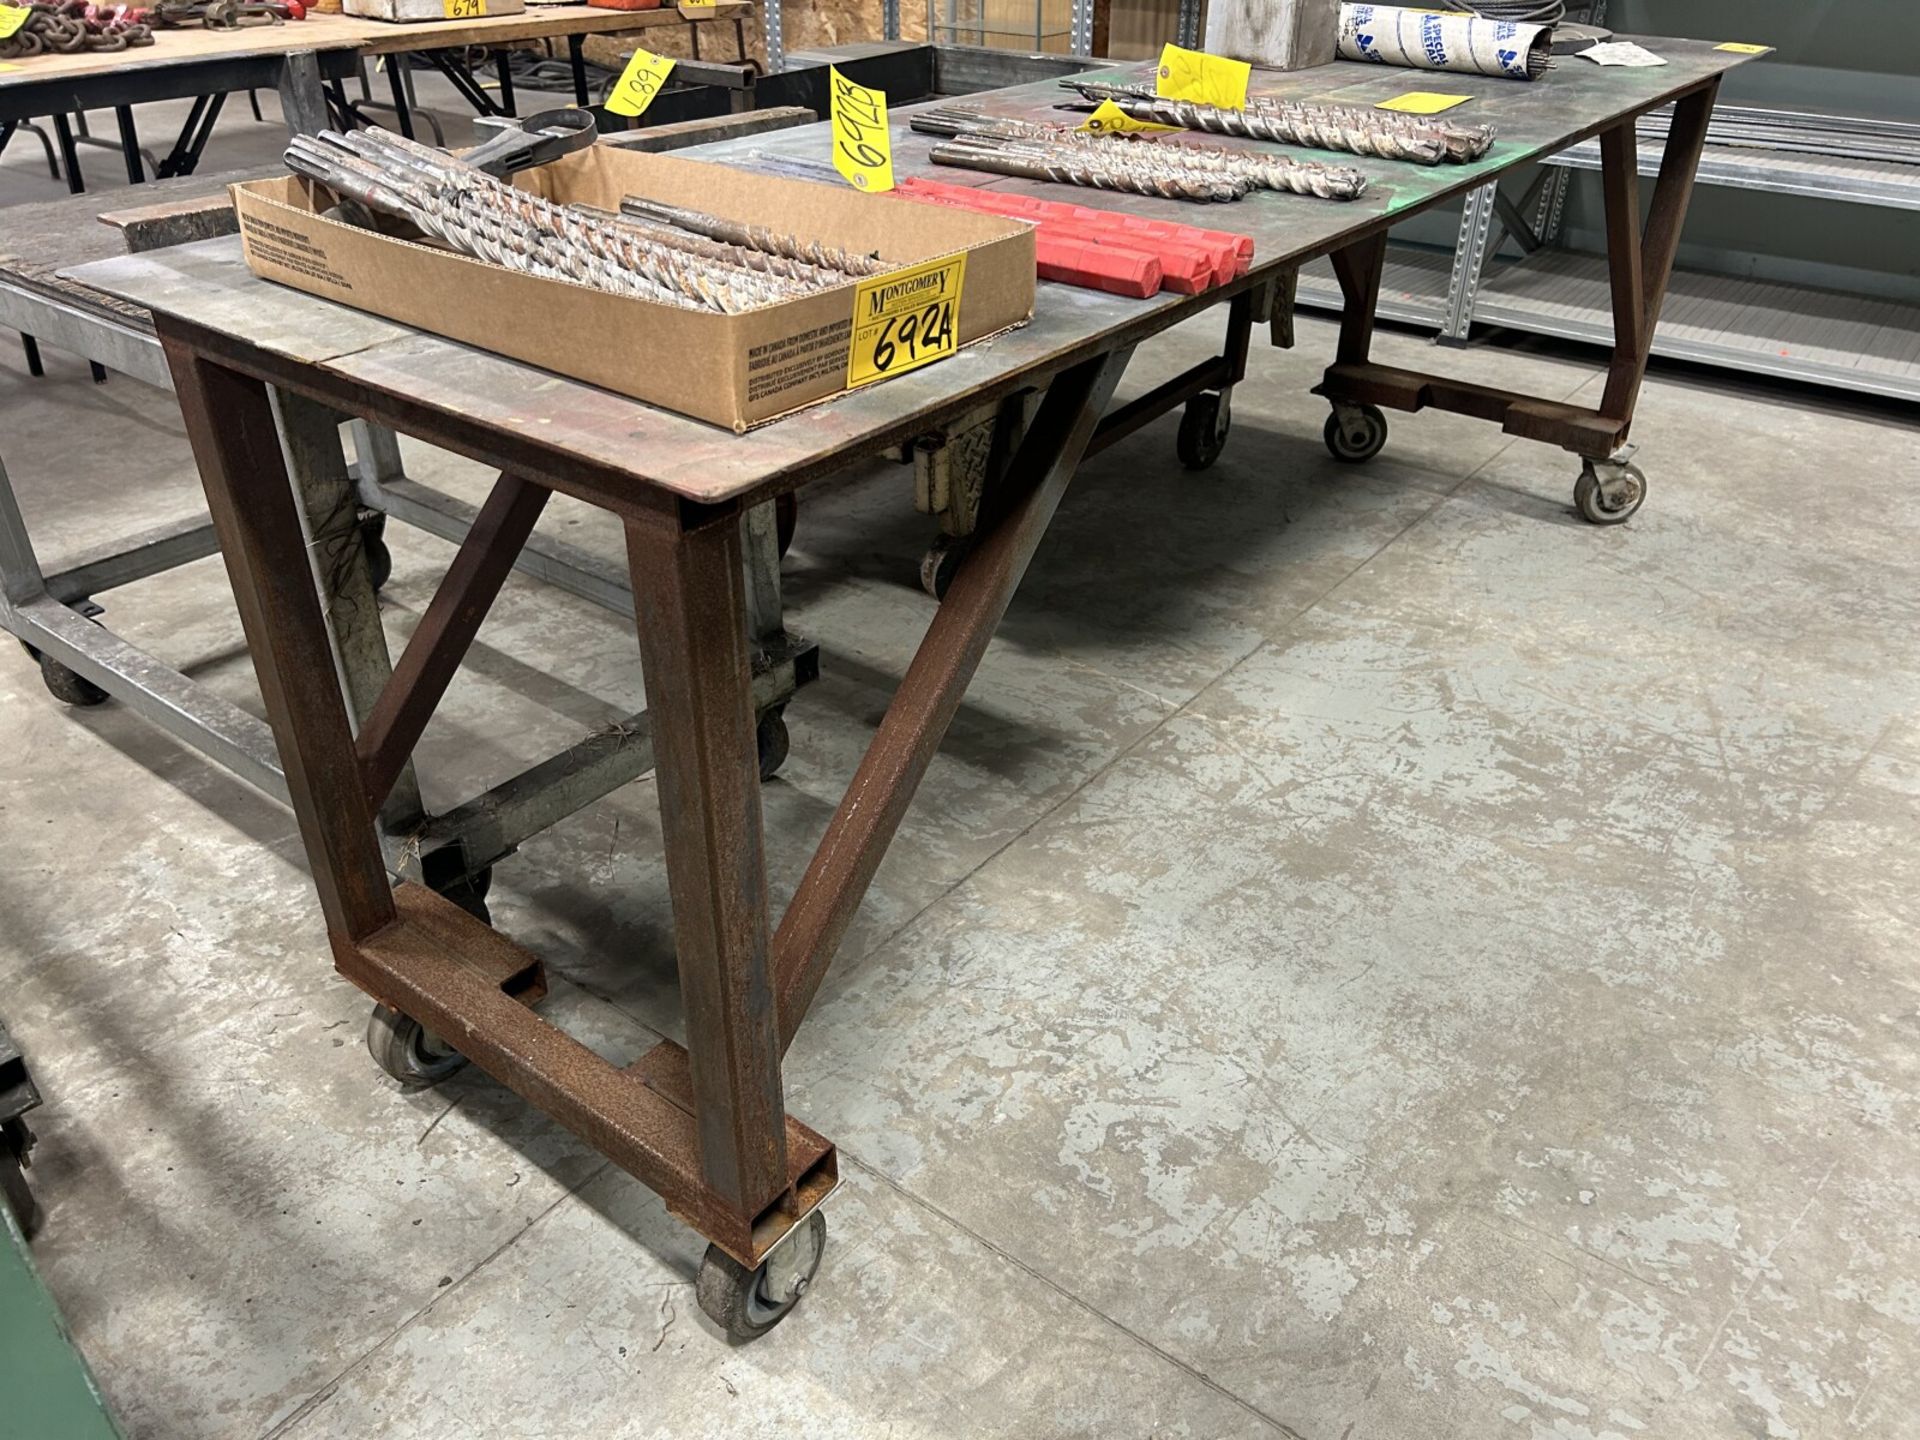 8'x28" STEEL WORK TABLE ON CASTORS - Image 3 of 3